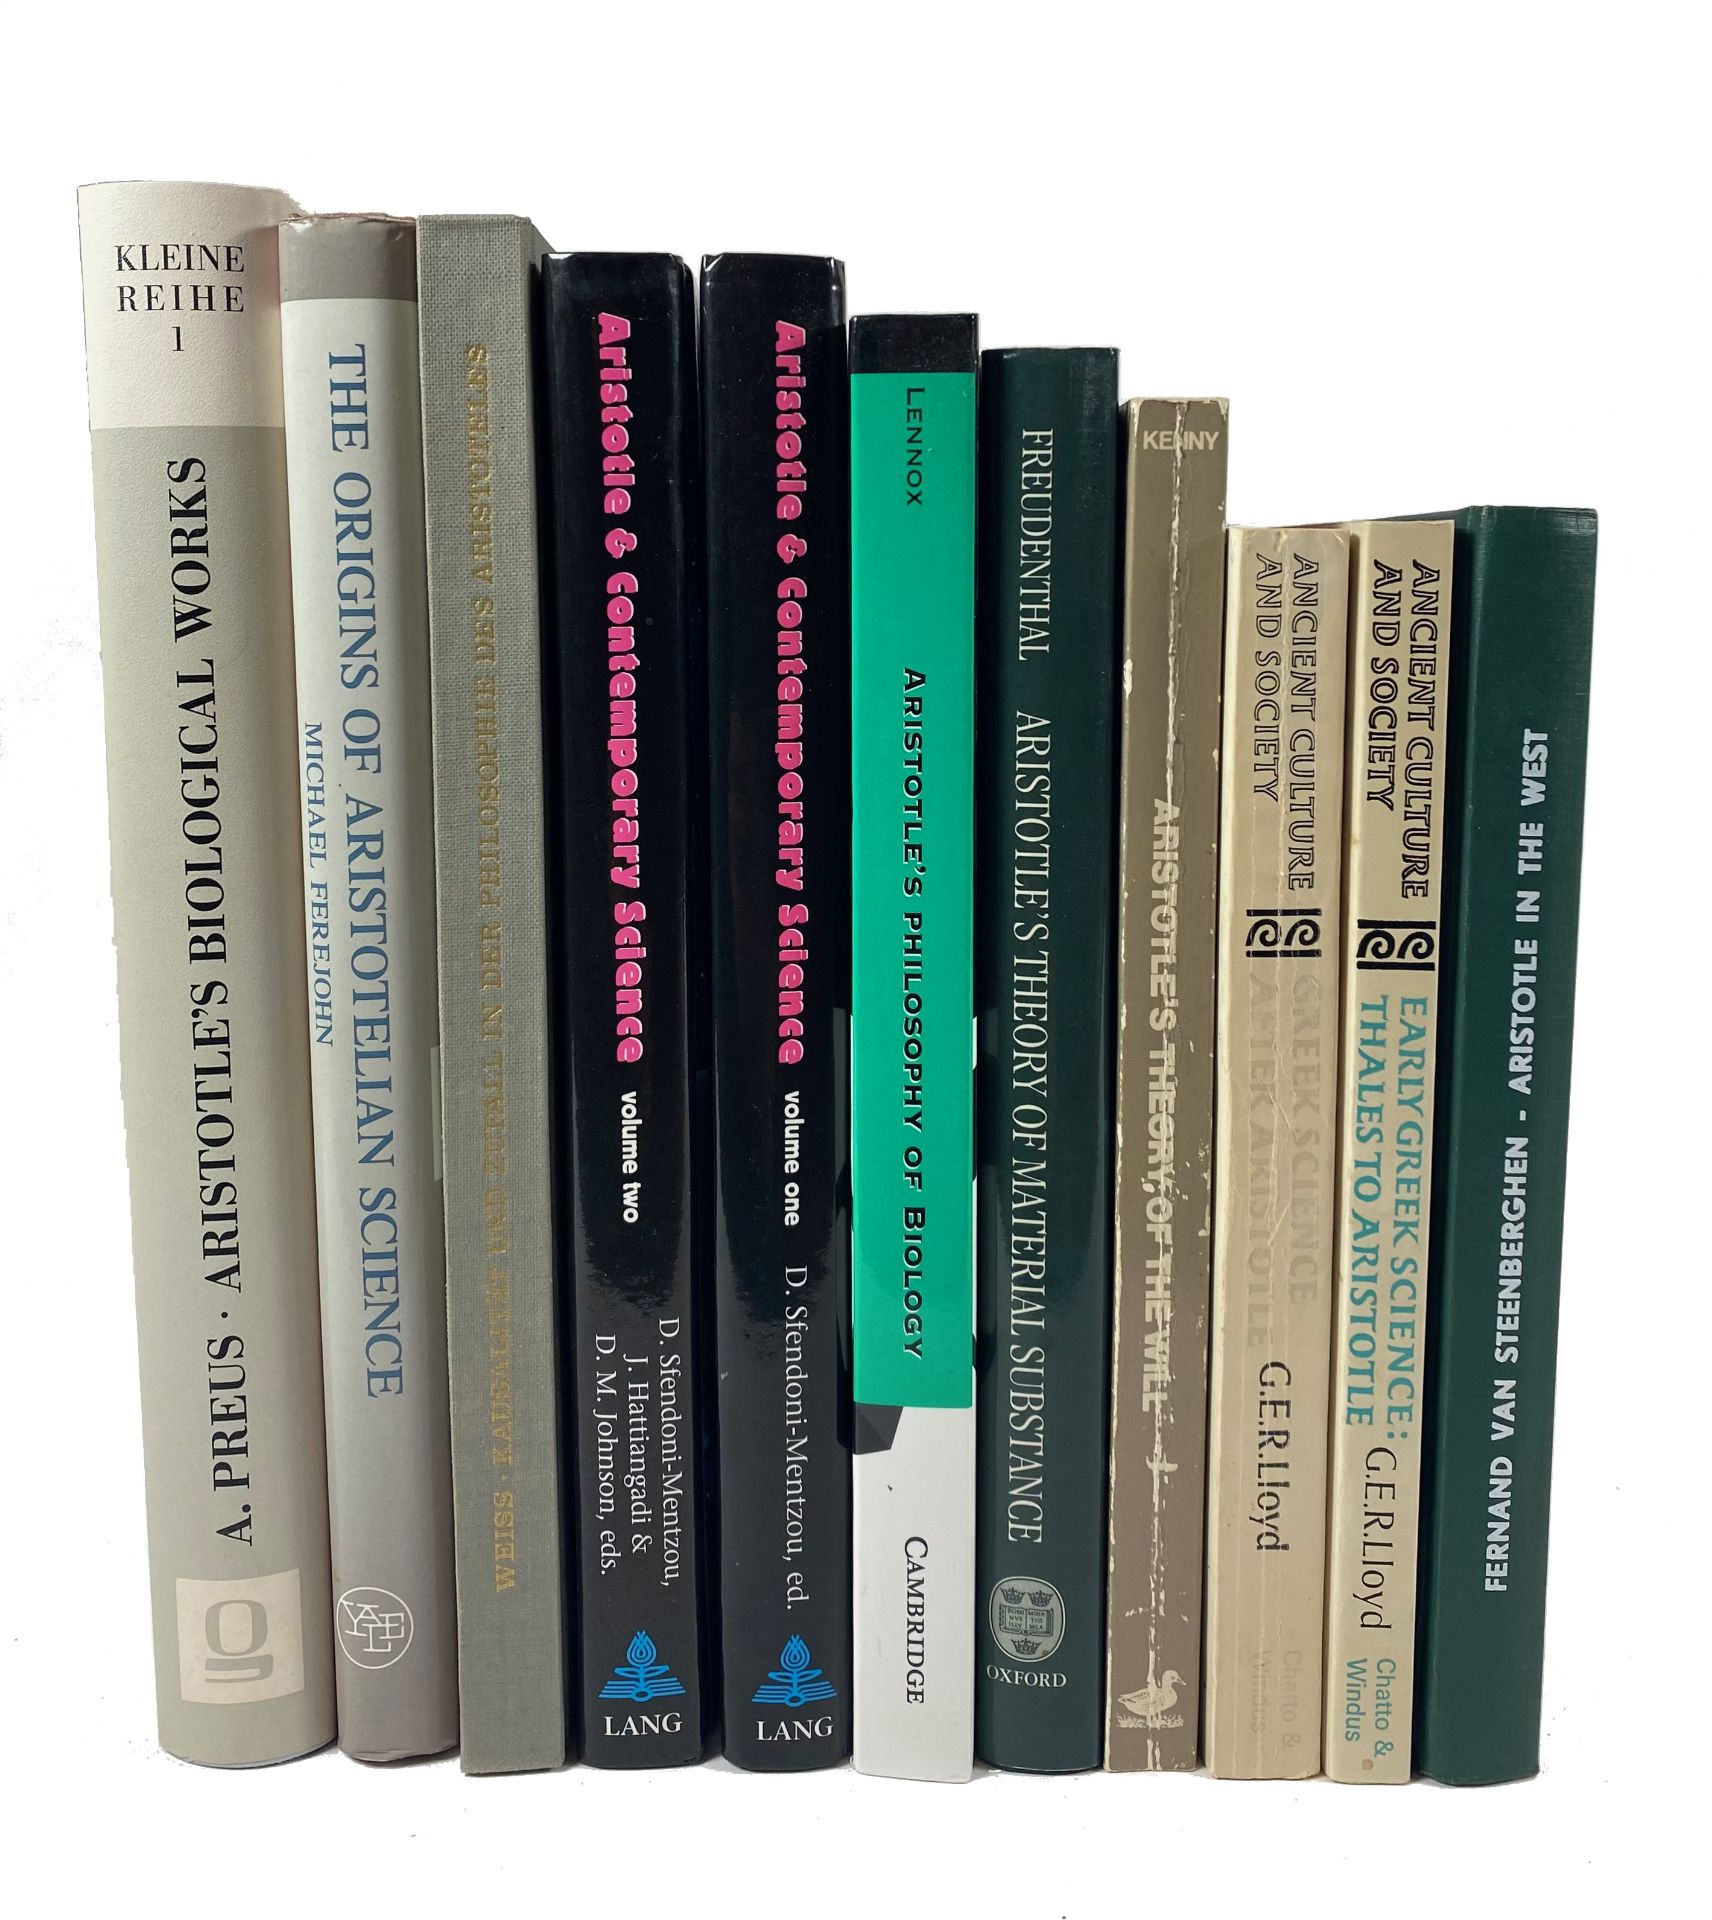 ARISTOTELES -- SFENDONI-MENTZOU, D., ed. Aristotle and contemporary science. (2000-01). 2 vols